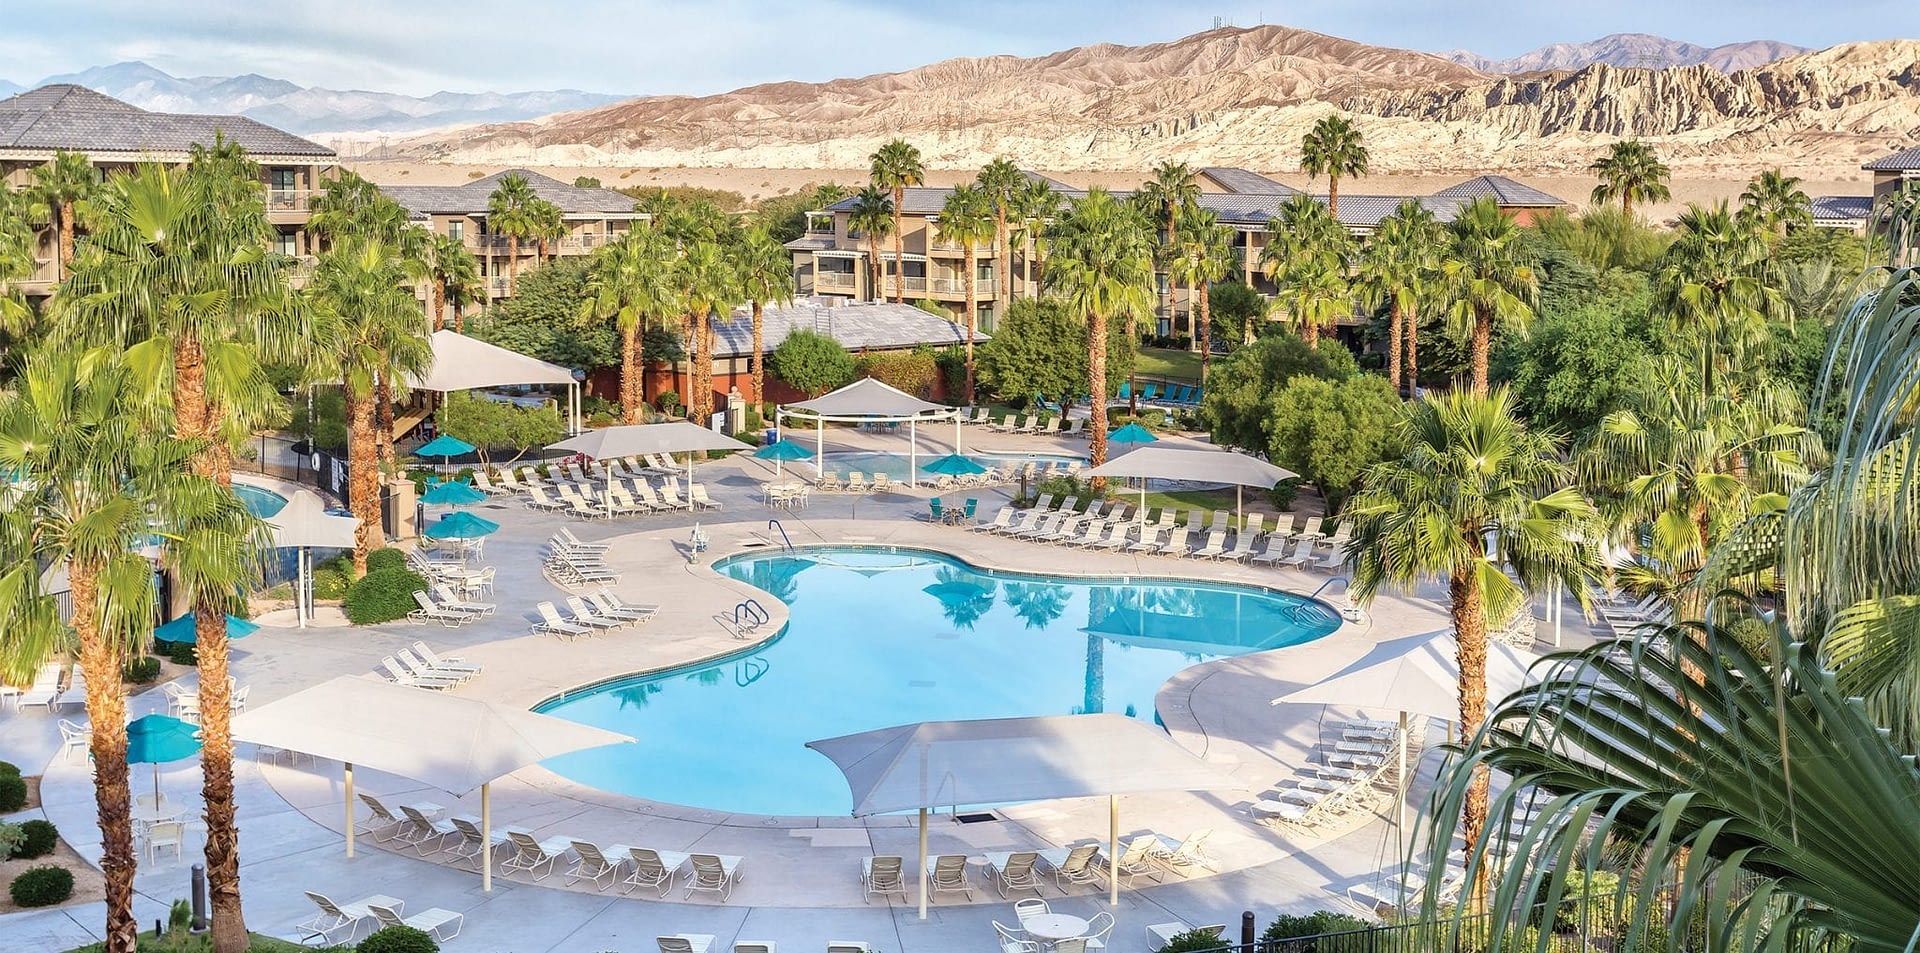 Wyndham Indio Resort Palm Springs, CA | Indio Timeshare Rentals